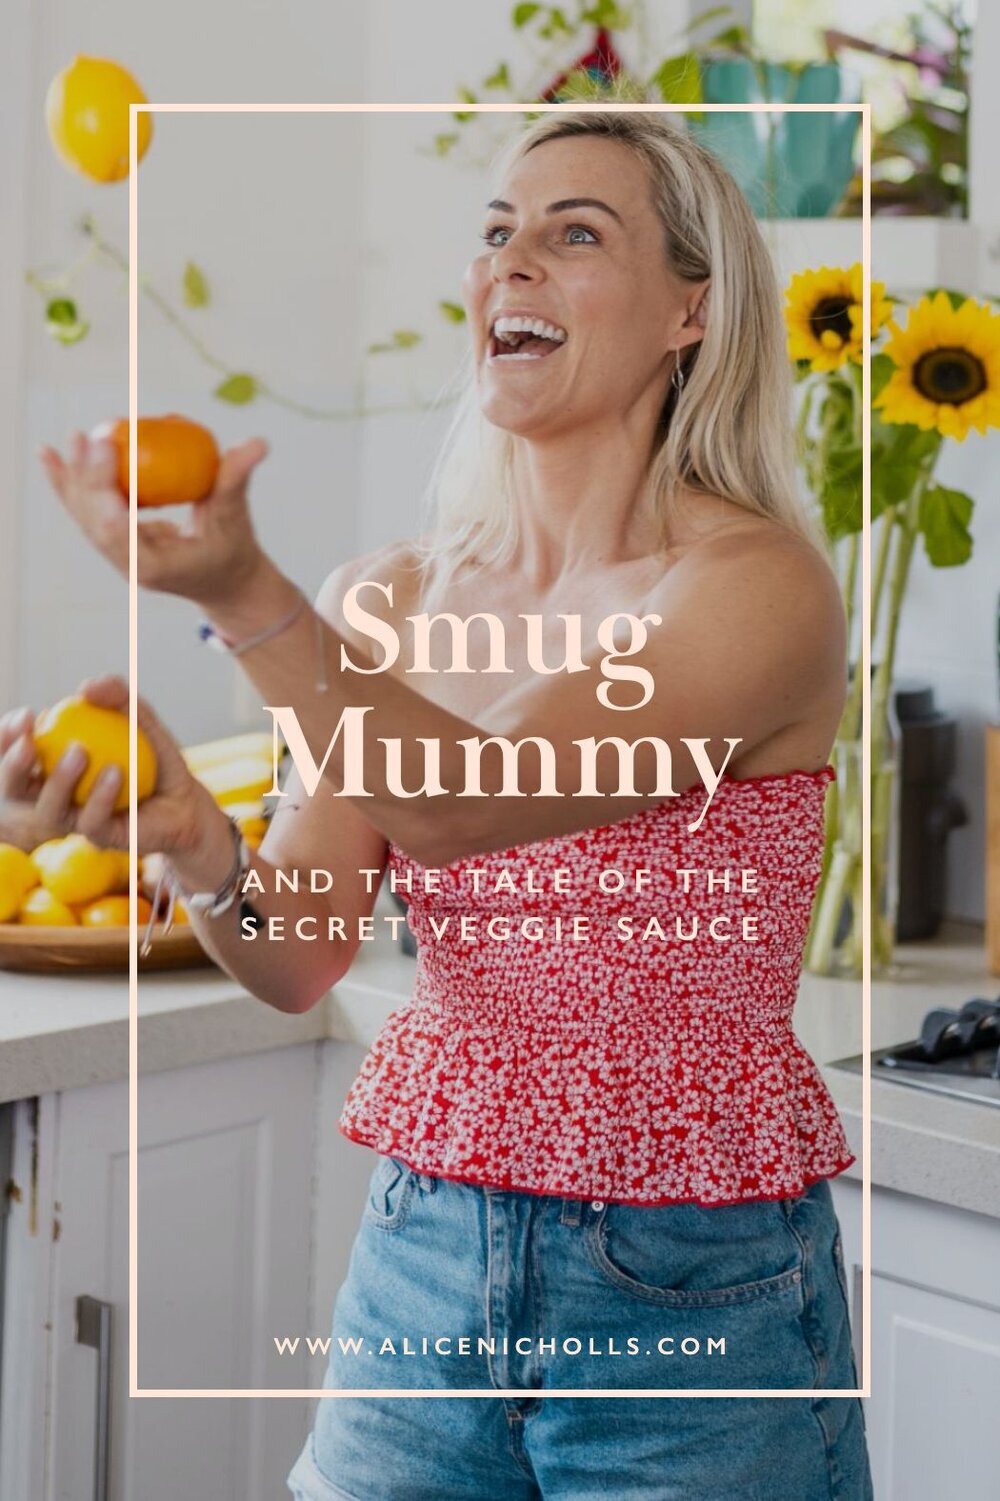 Smug+Mummy+And+the+Tale+of+the+Secret+Veggie+Sauce+by+Alice+Nicholls.jpeg